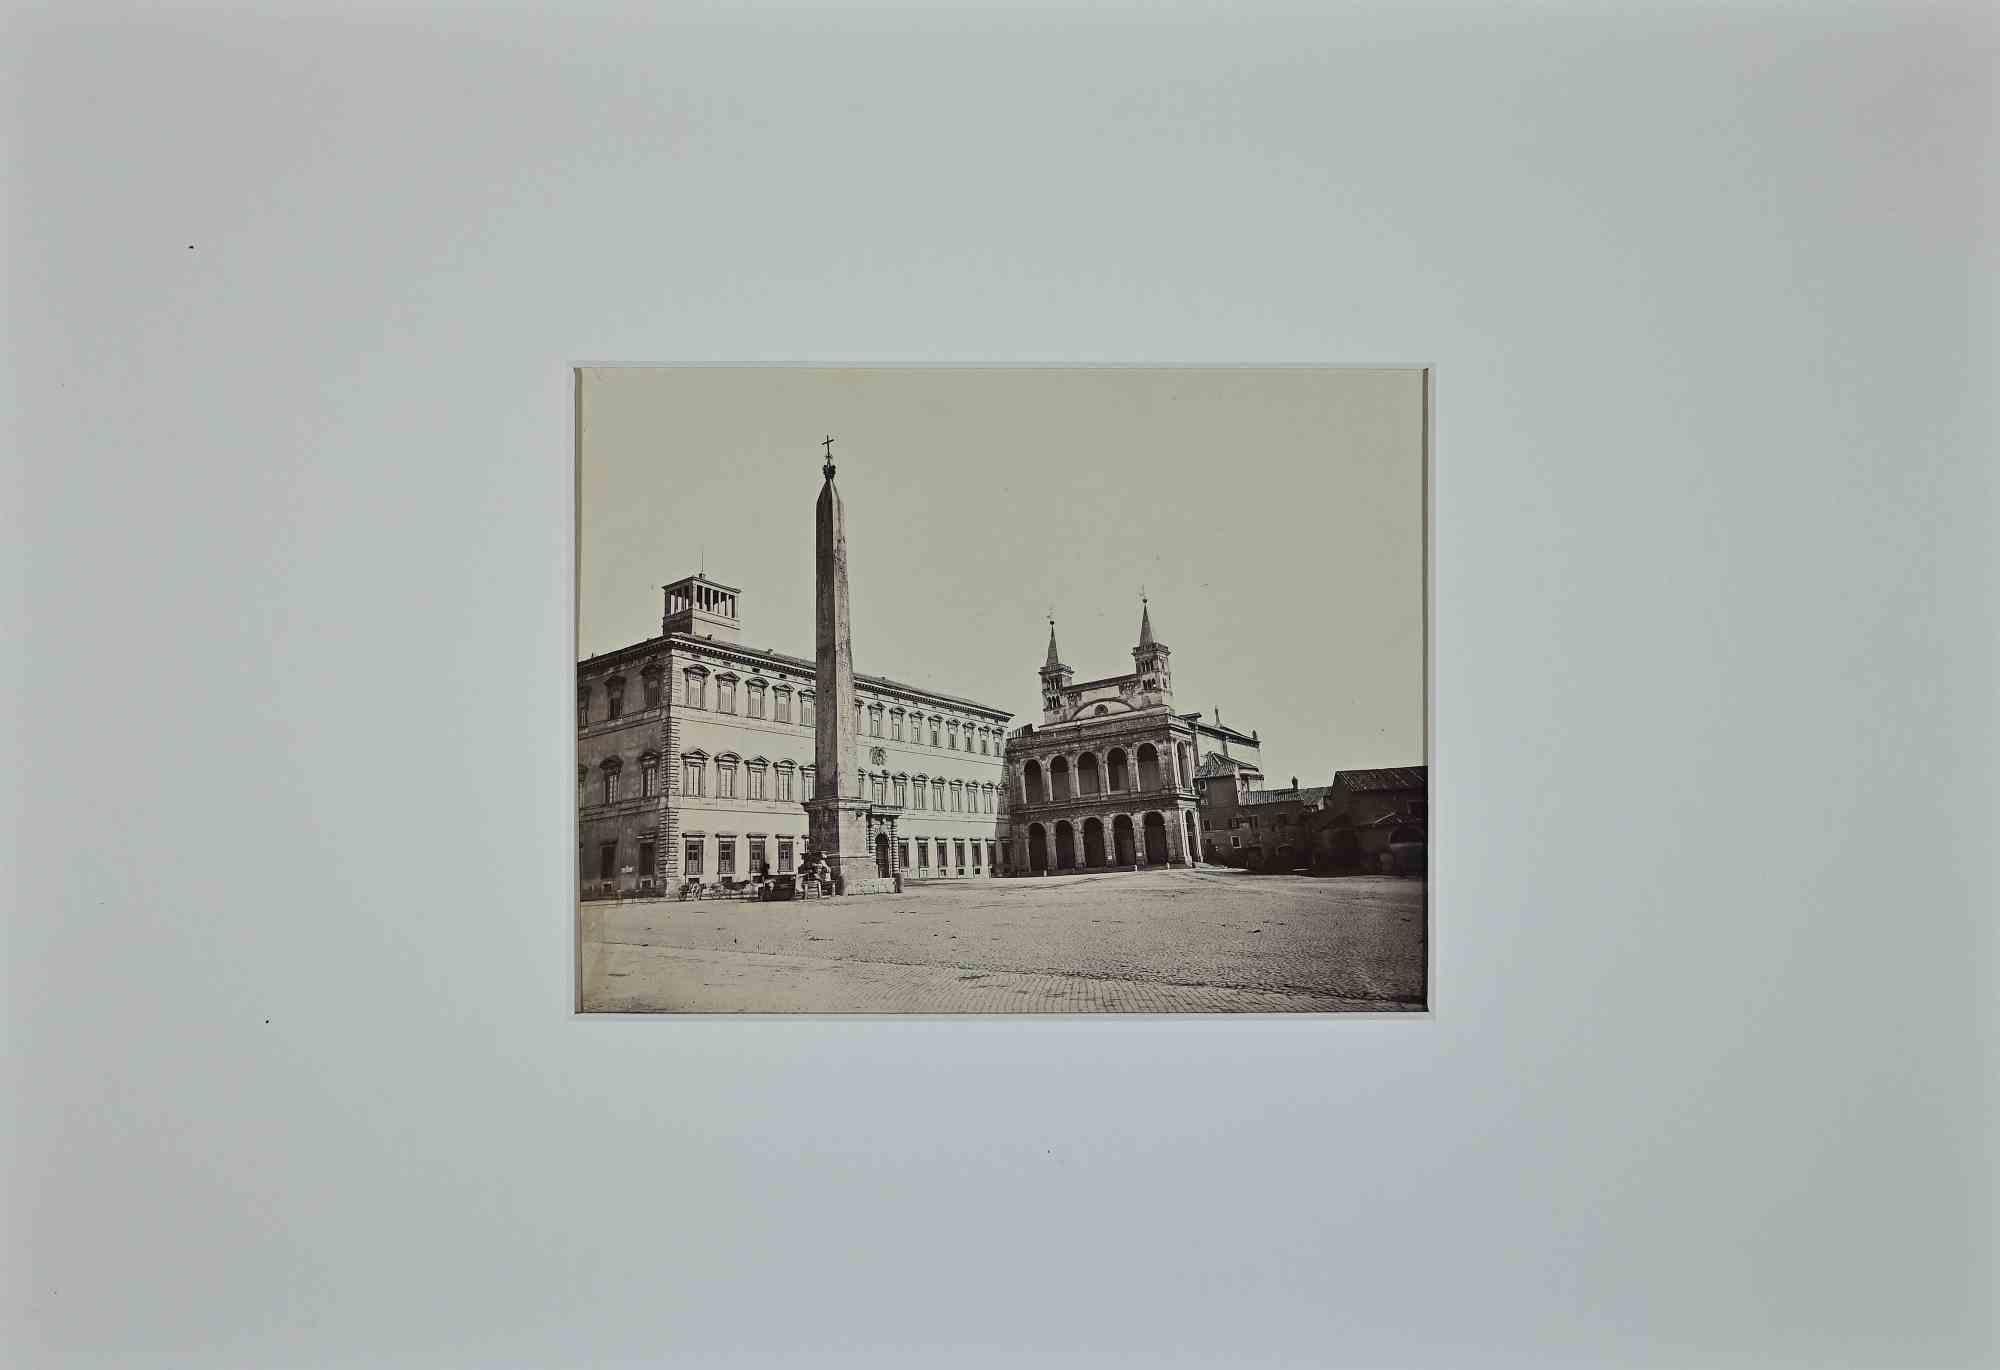 Francesco Sidoli Black and White Photograph - Piazza San Giovanni in Laterano - Photograph by F.Sidoli - 19th Century